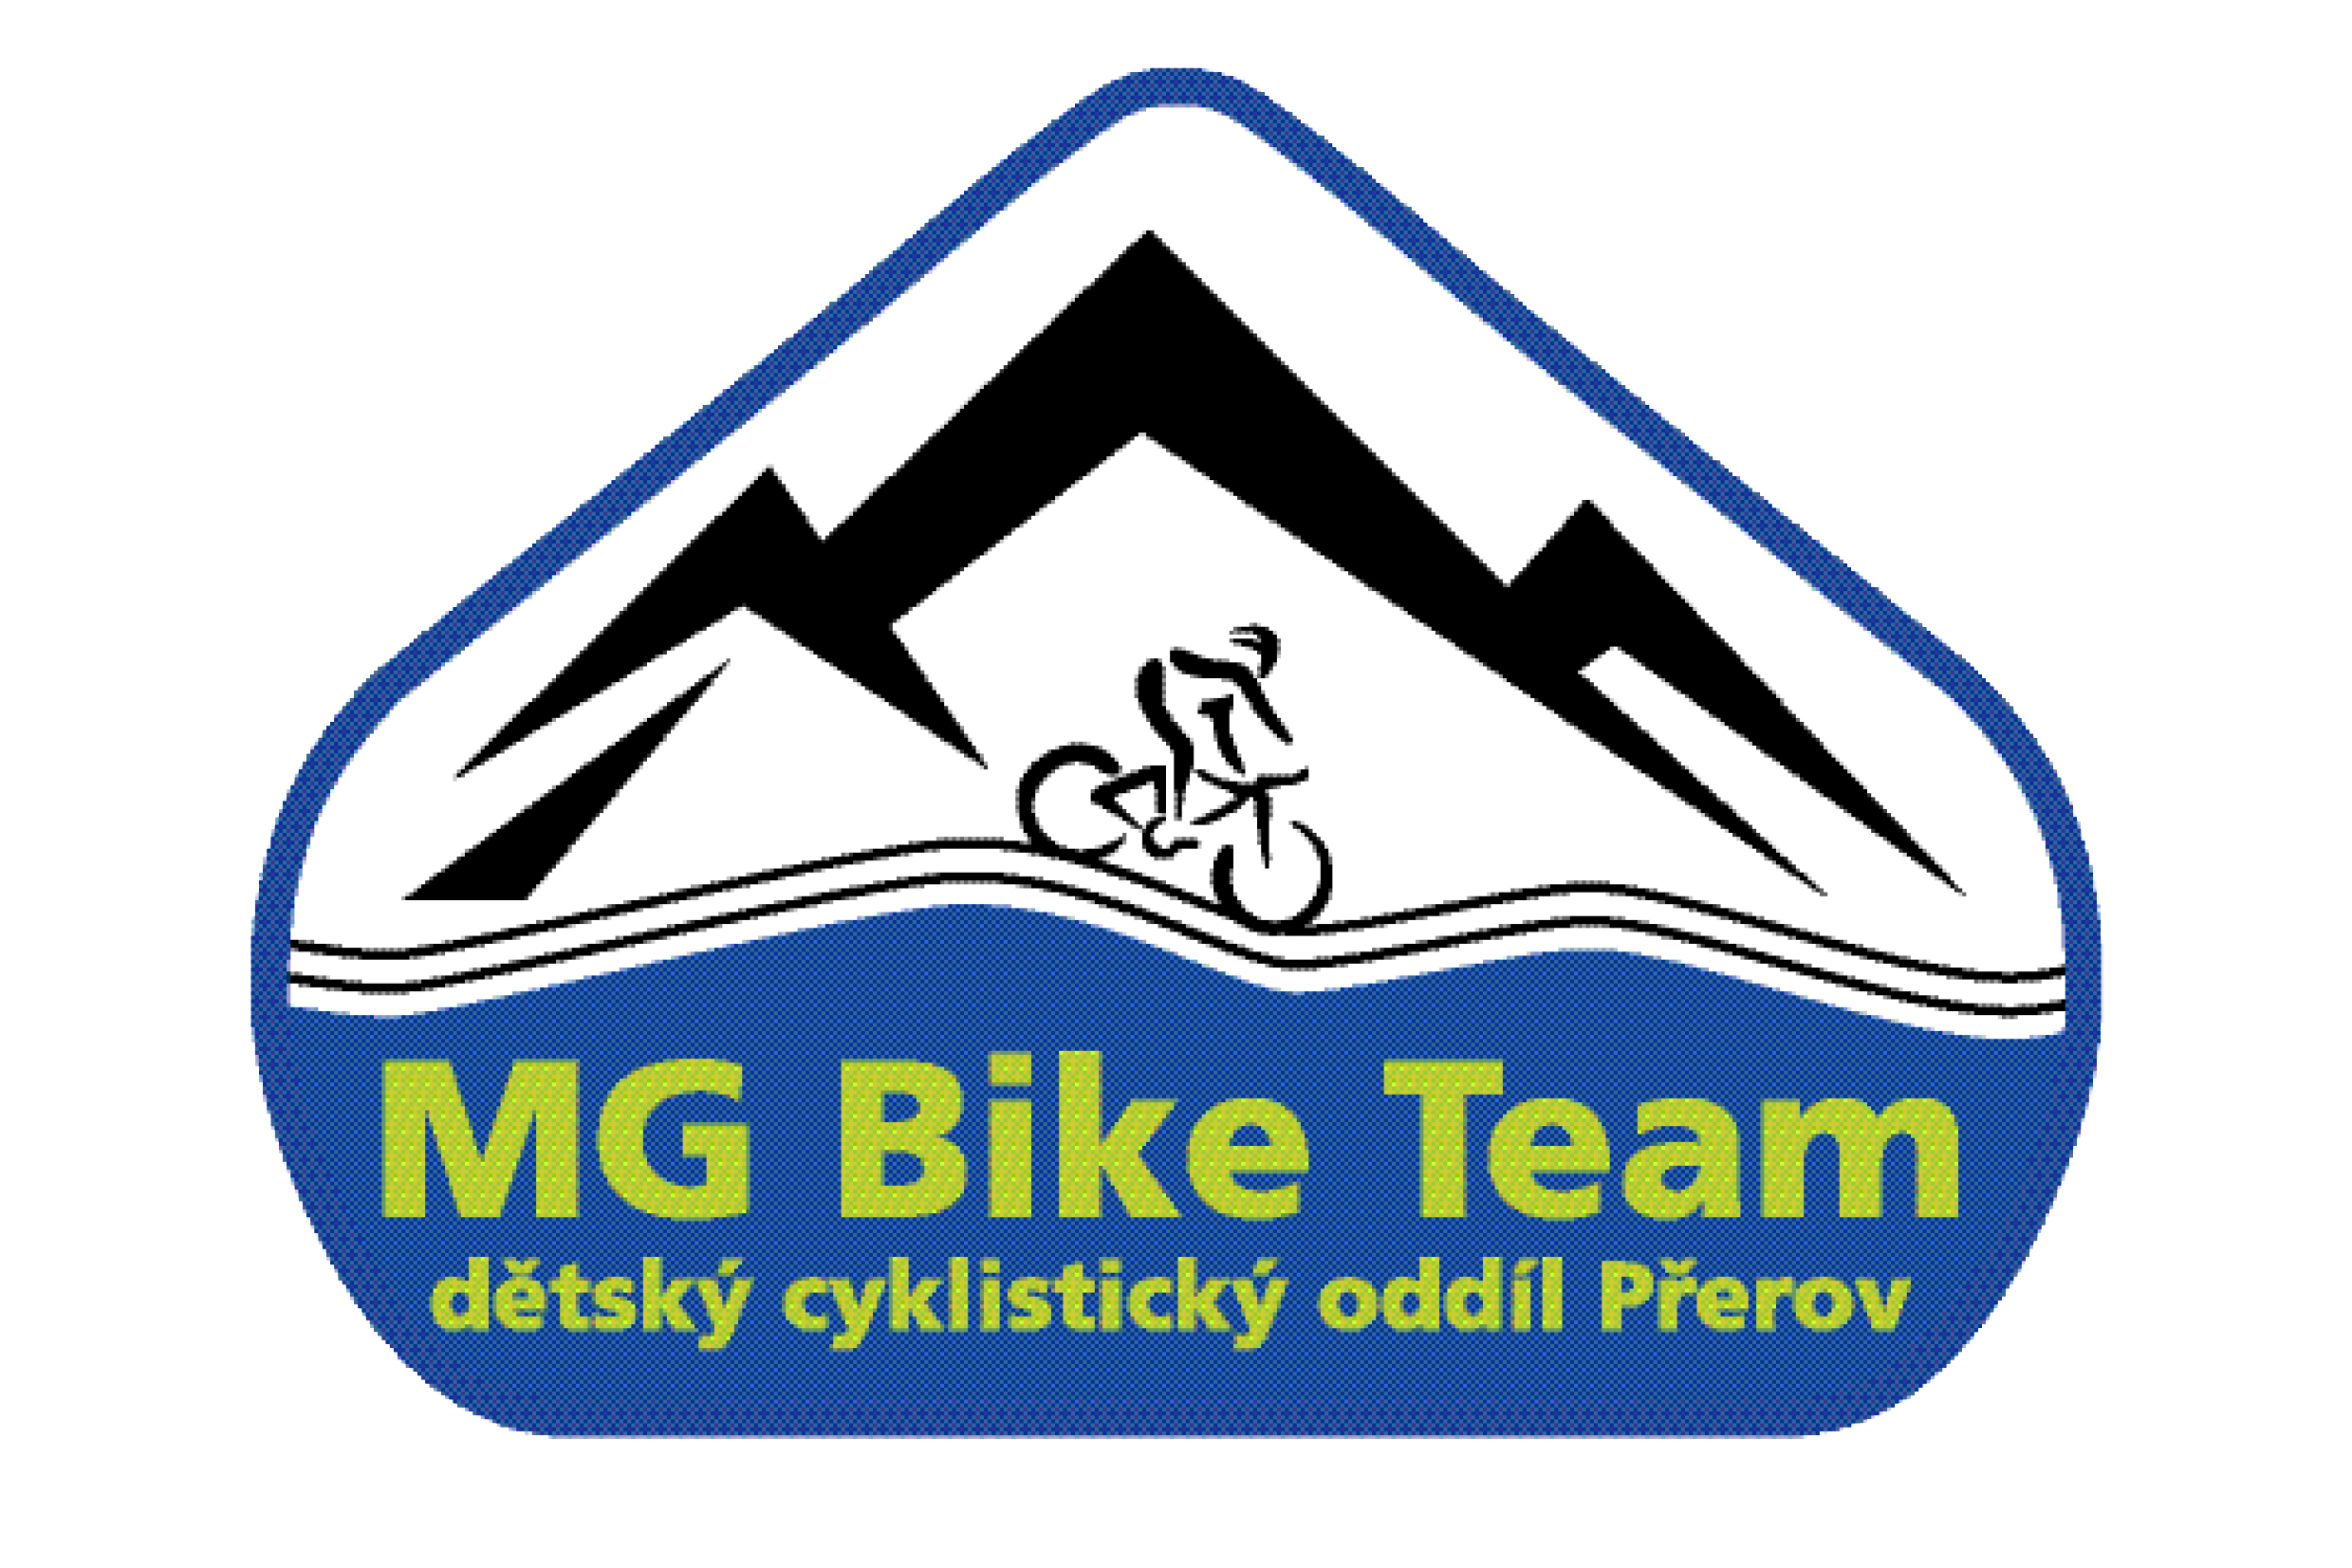 MG Bike team logo